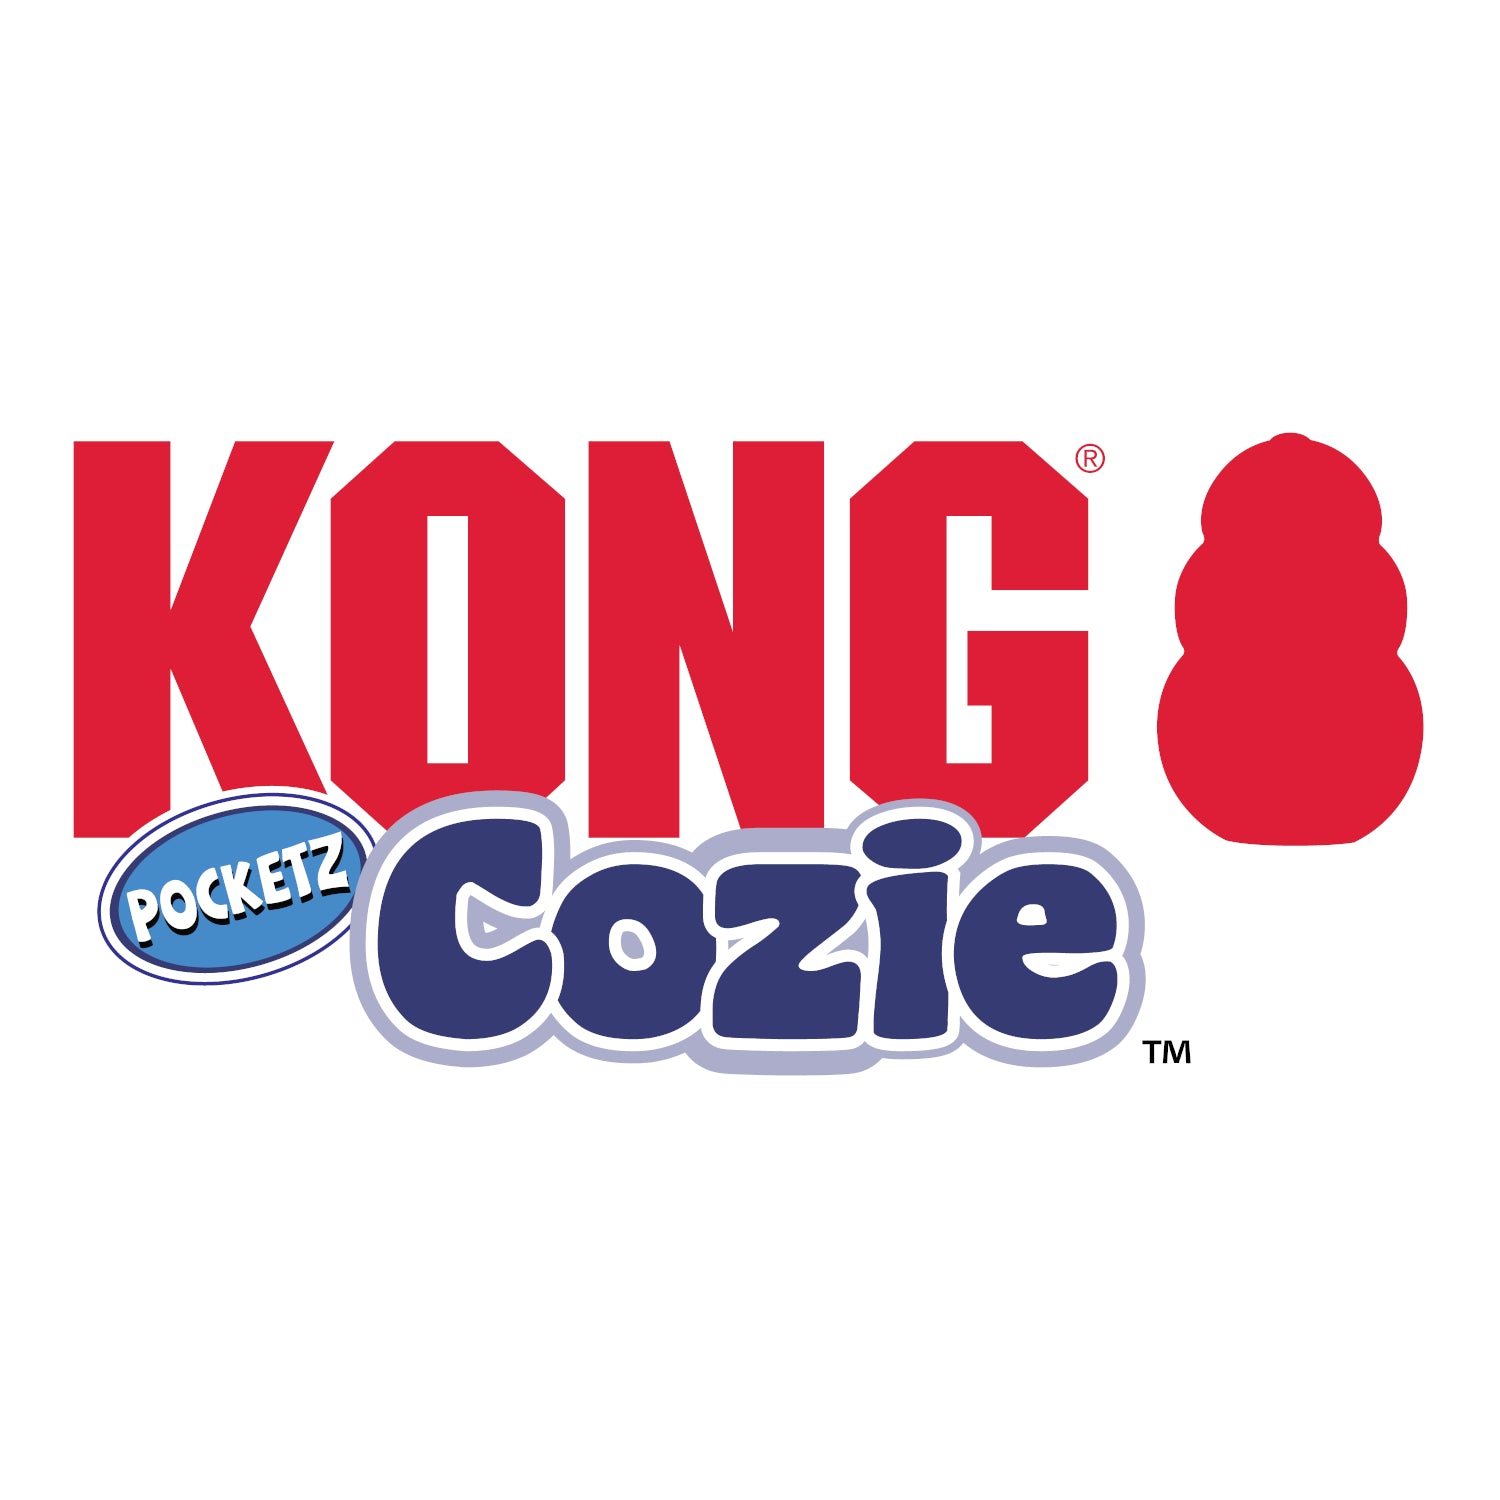 KONG Cozie Pocketz Fox